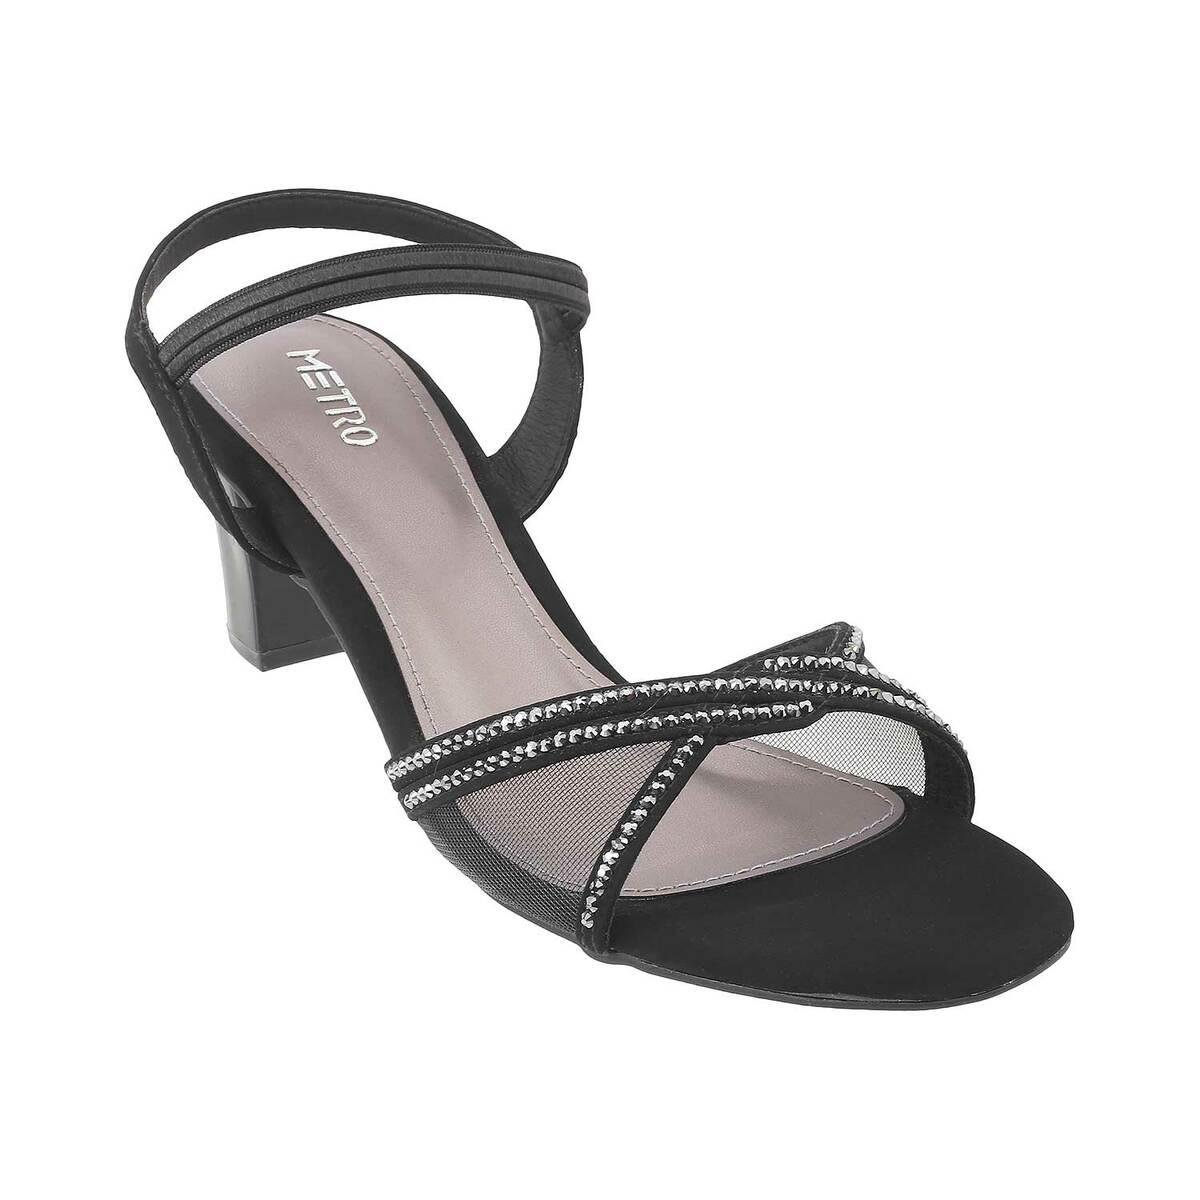 Buy Women Black Party Sandals Online SKU: 40-41-11-36-Metro Shoes